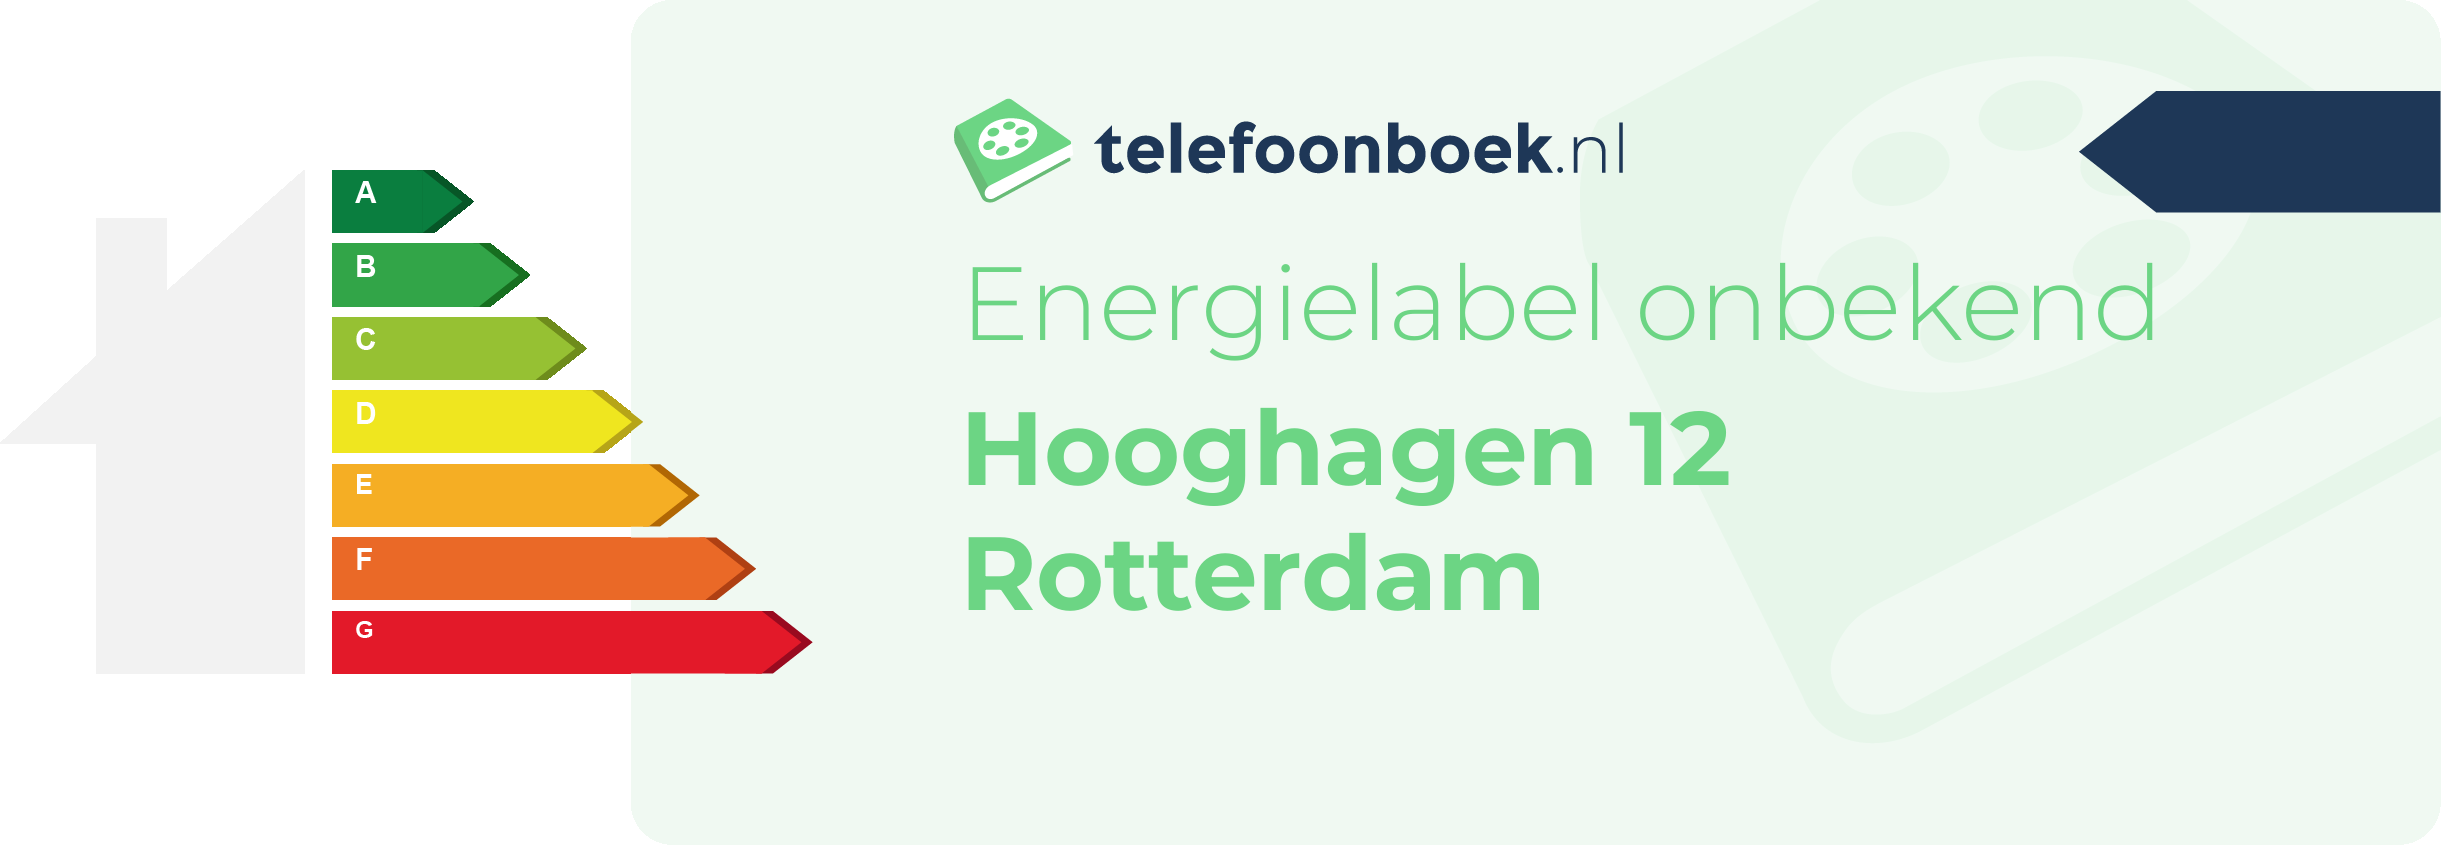 Energielabel Hooghagen 12 Rotterdam